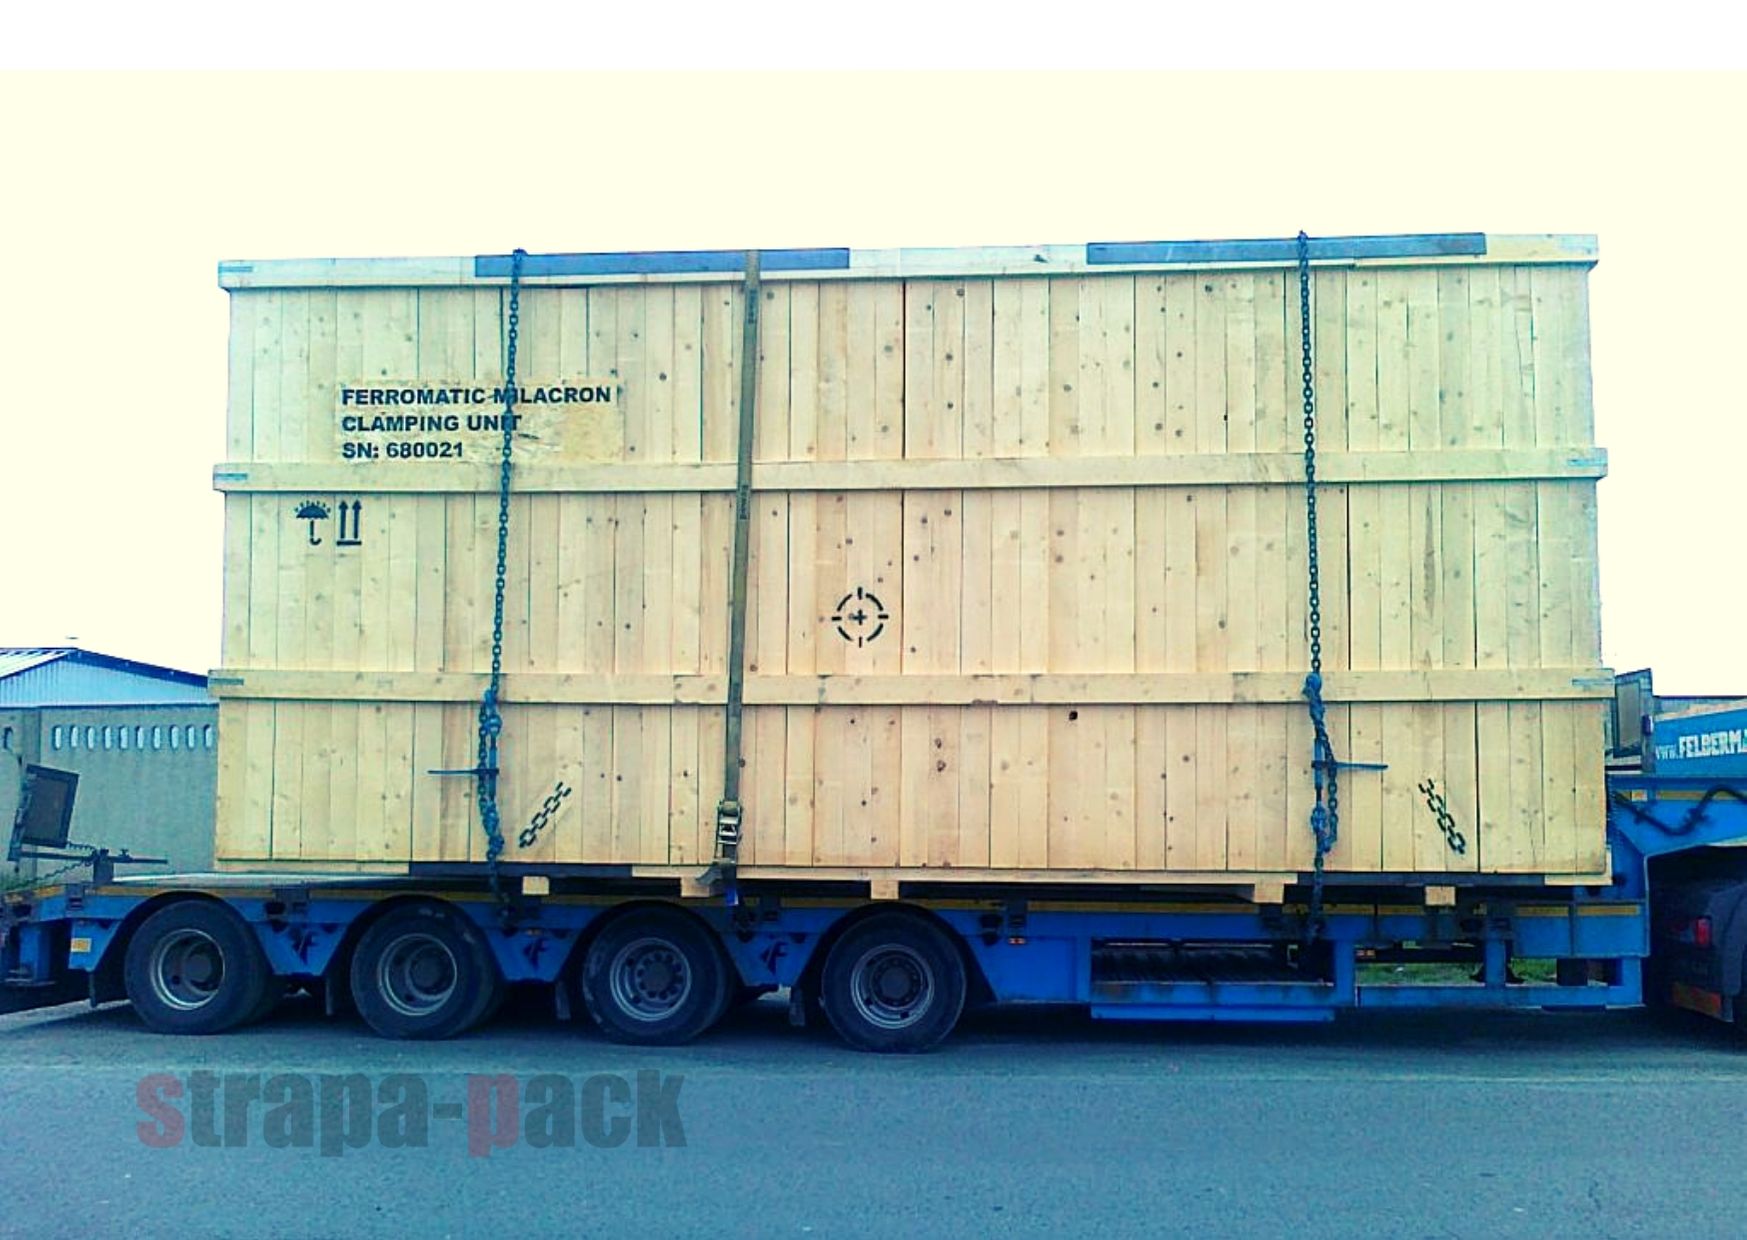 strapa-pack road transport